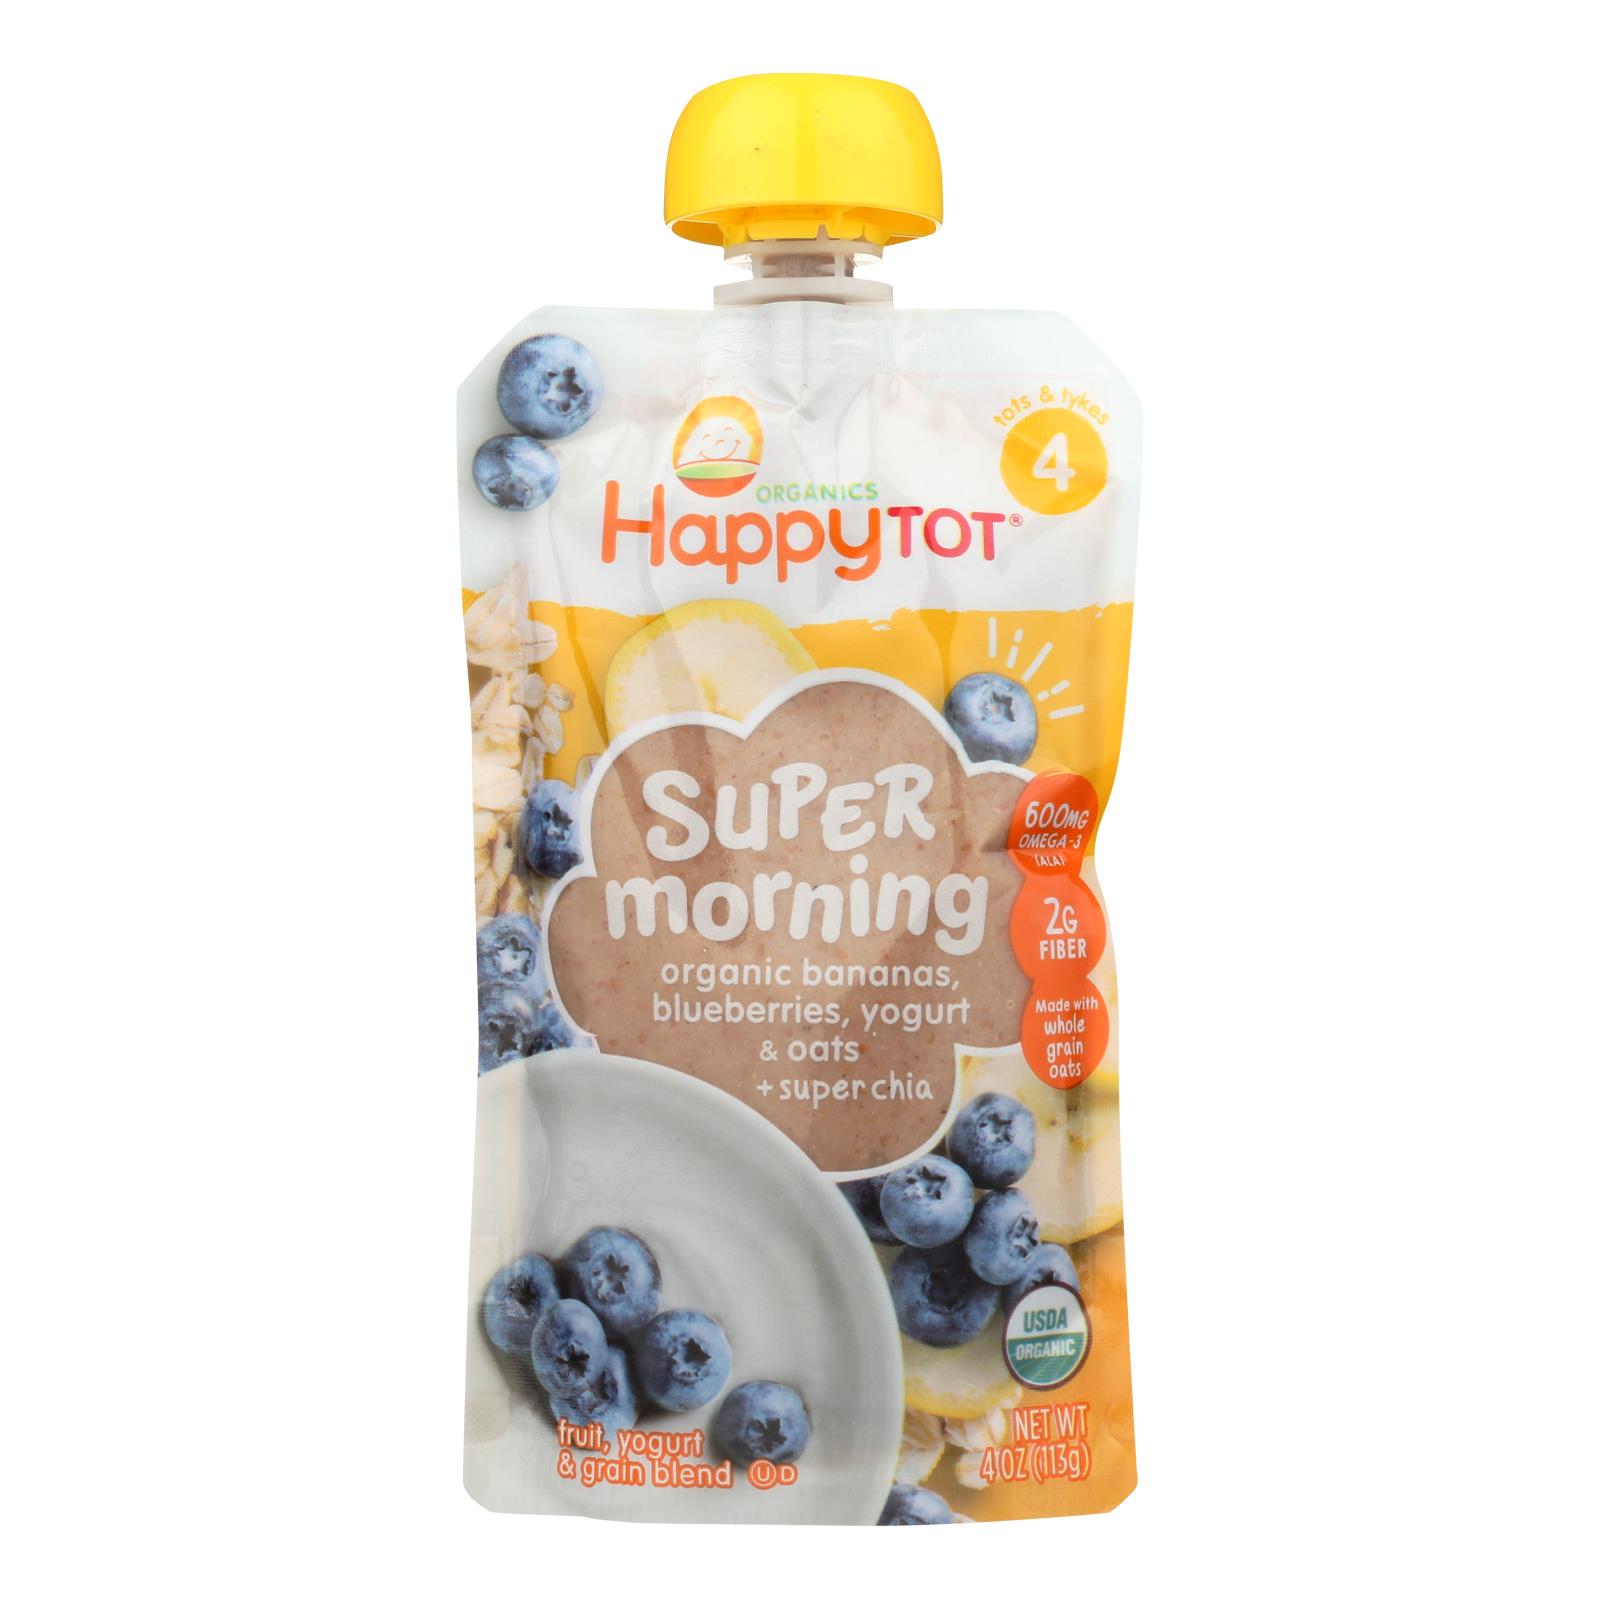 Happy Tot Super Morning Organic Bananas, Blueberries, Yogurt And Oats + Super Chia - 16개 묶음상품 - 4 OZ